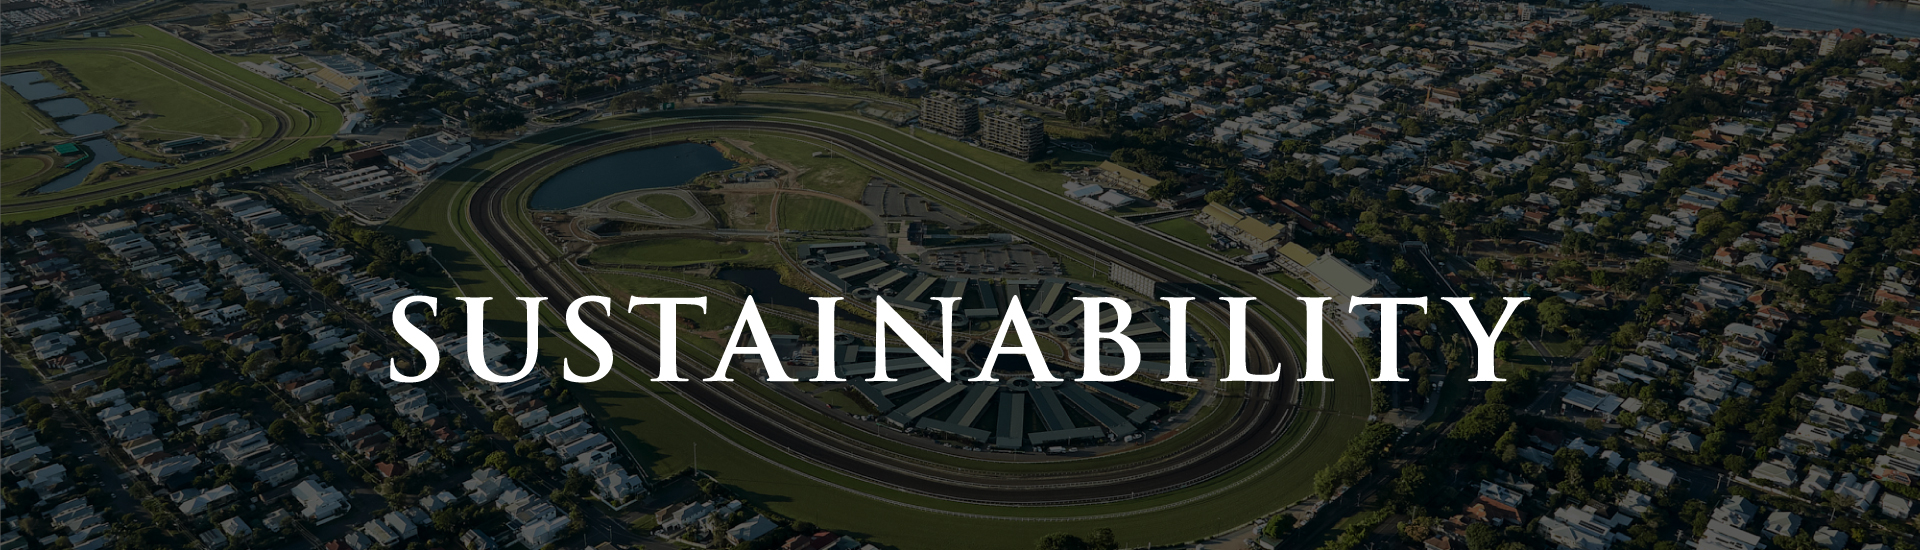 Sustainability_Header_1920x550 (002) | Brisbane Racing Club